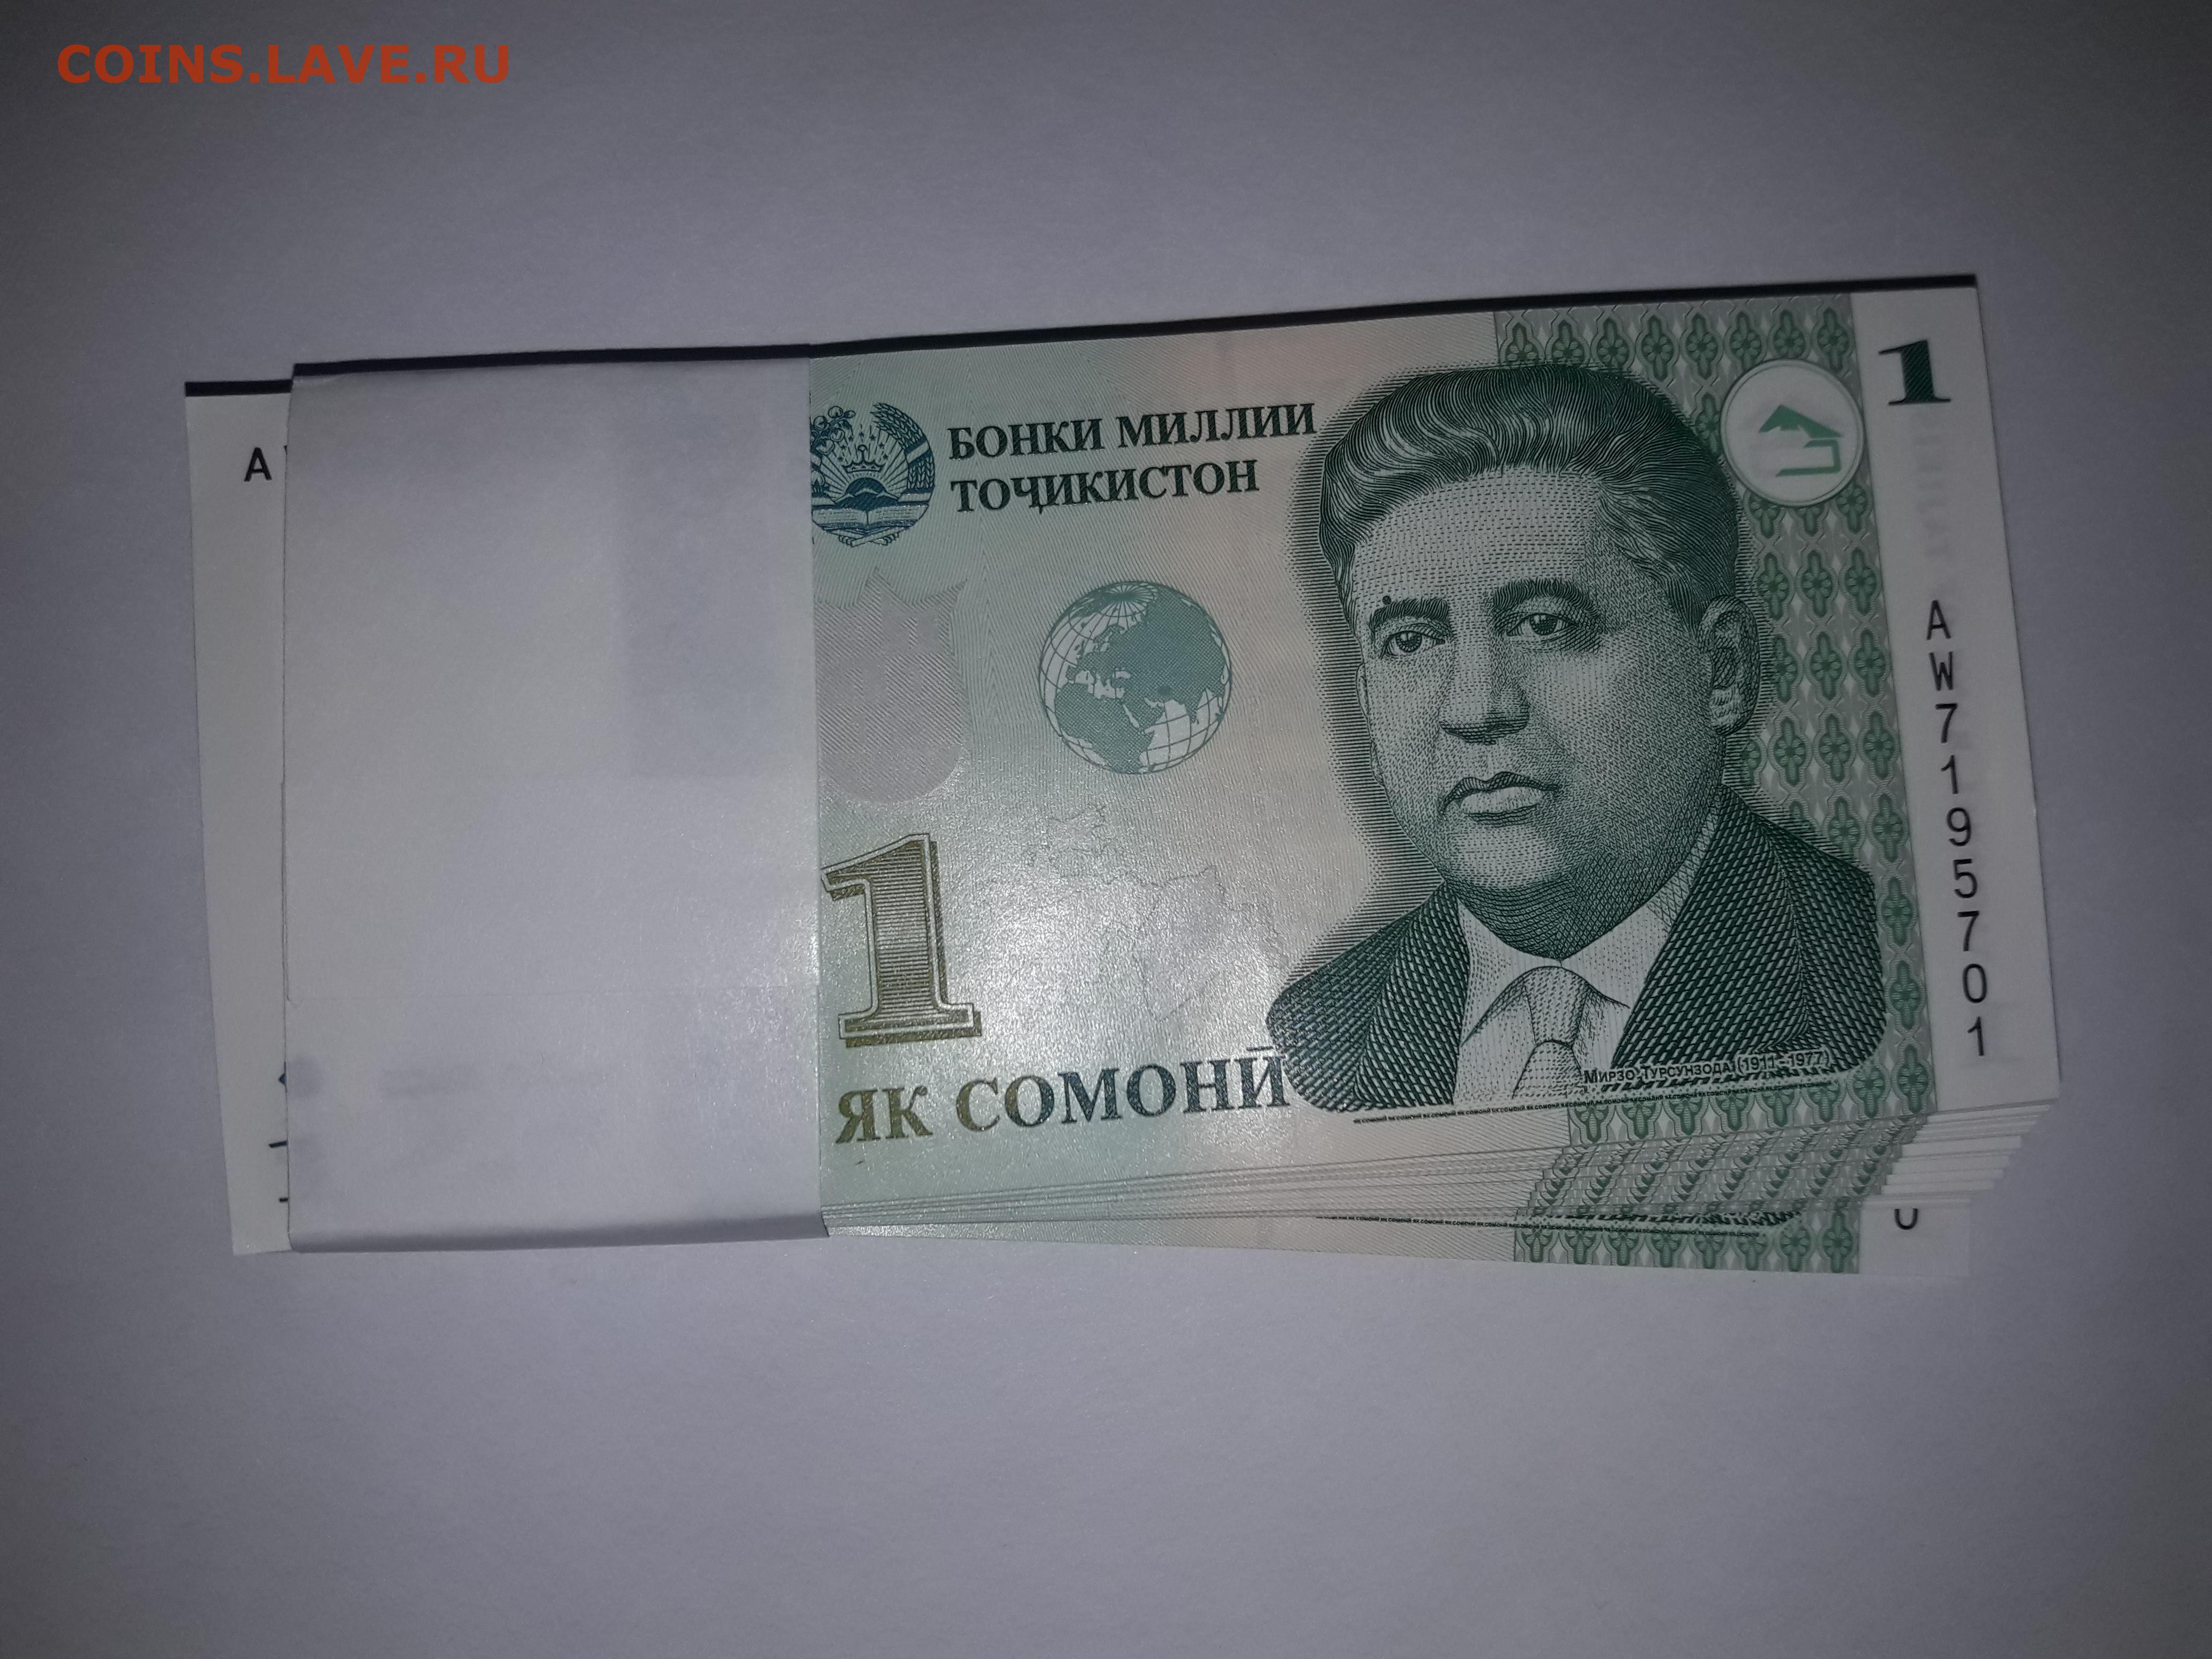 5000 рублей таджикистана на сегодня. Деньги Сомони фото. 1 Сомони. Пули Сомони.